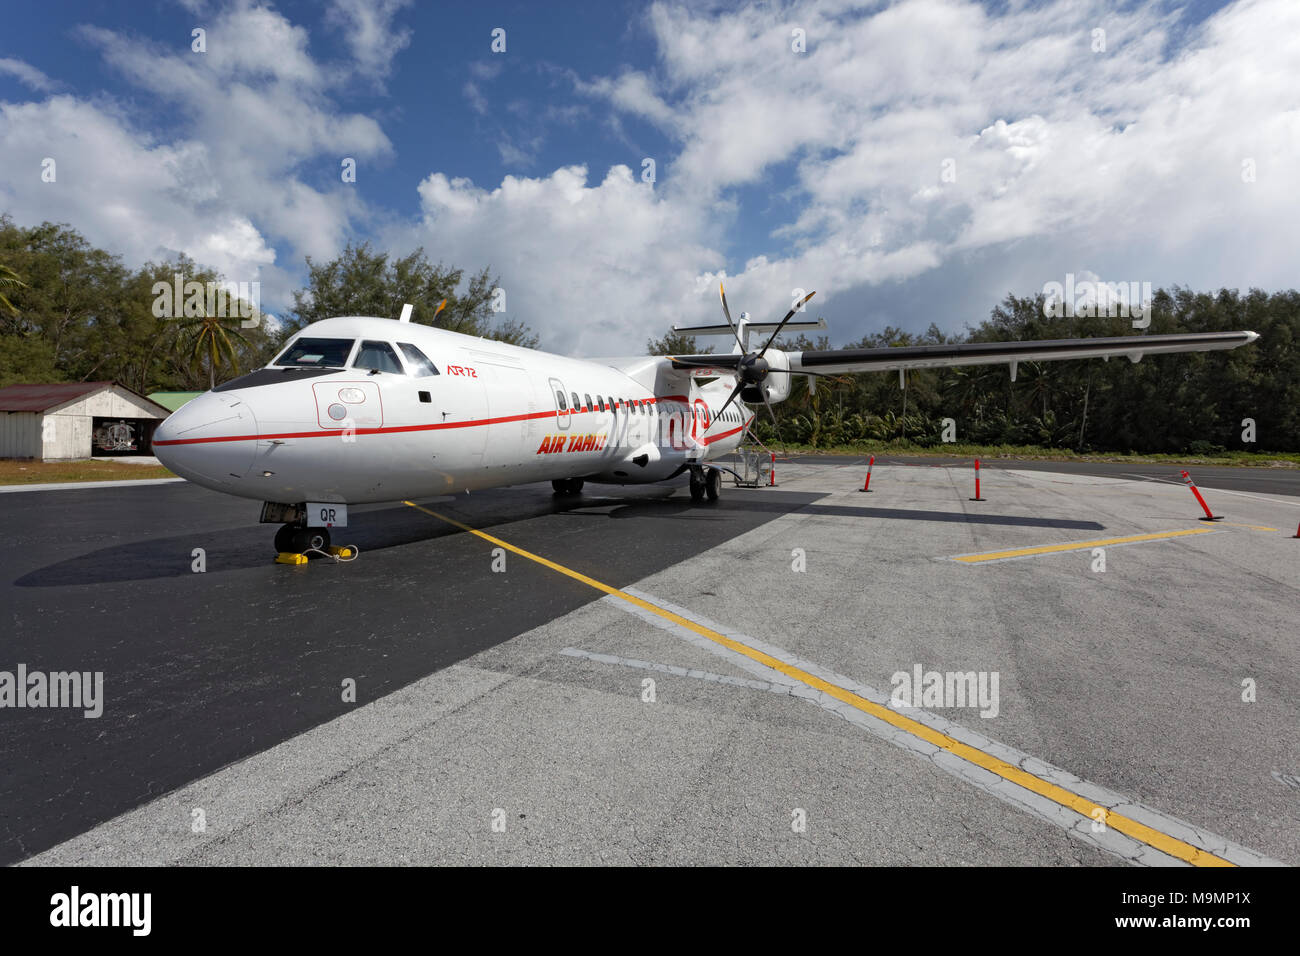 Avión ATR 72, Avions de Transport Régional, Air Tahiti, Aeropuerto, Rangiroa Isla, las Islas de la sociedad, Islas de Barlovento Foto de stock